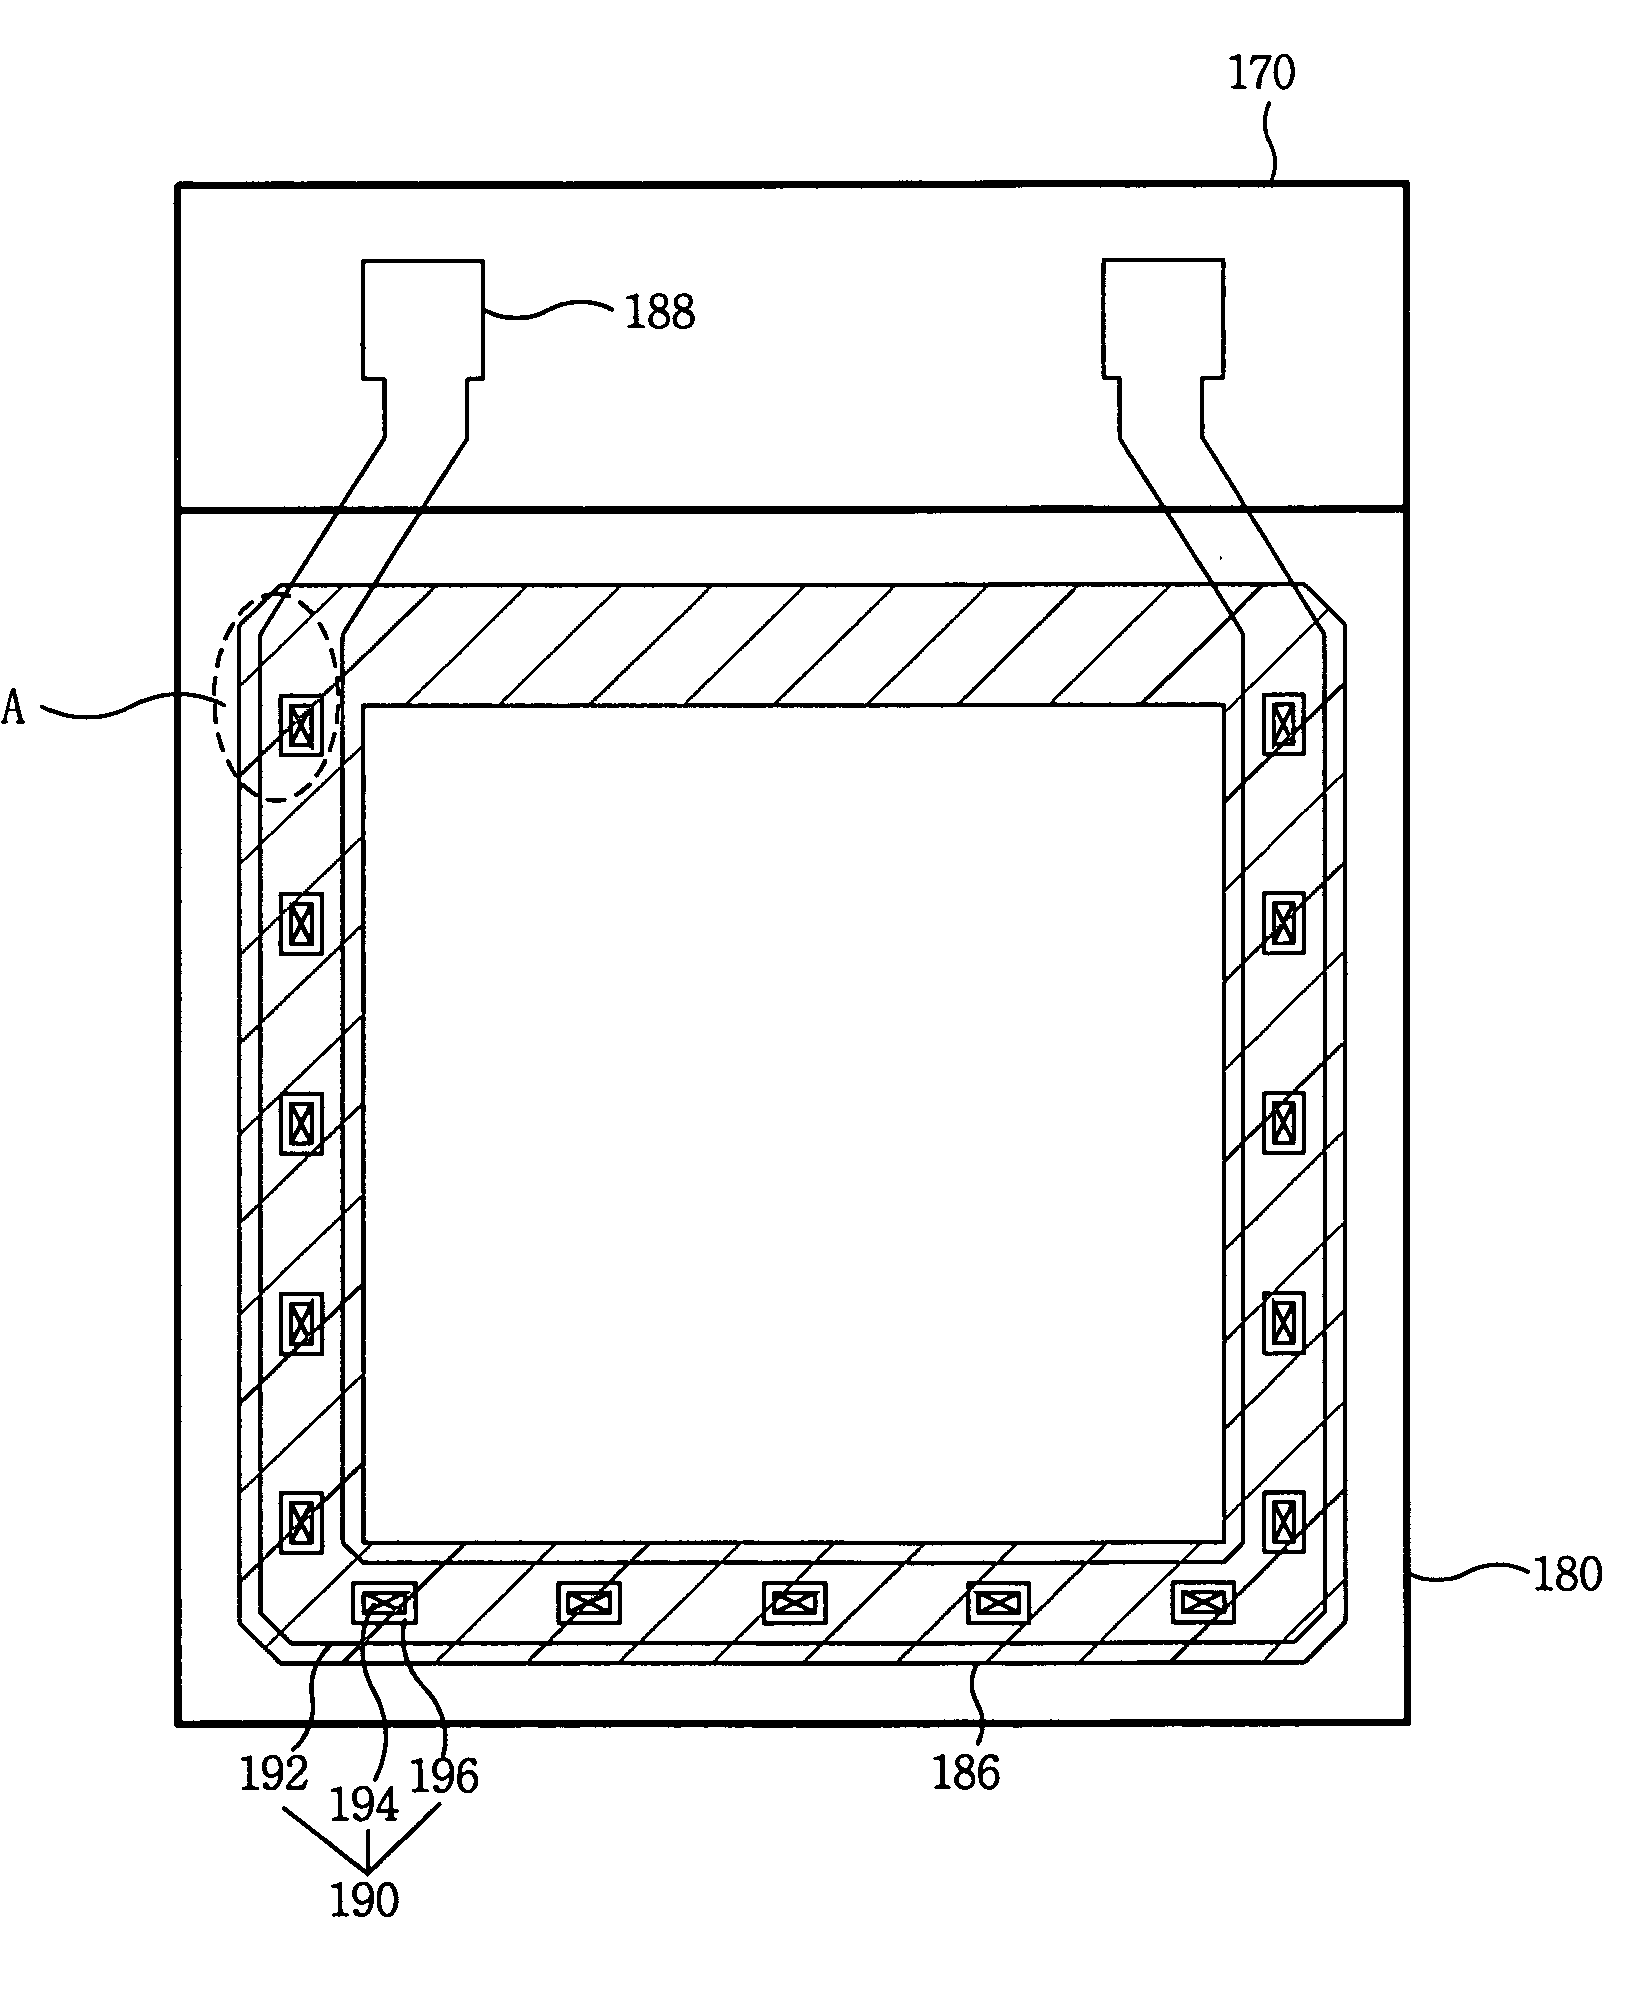 Liquid crystal display device and method of fabricating the same